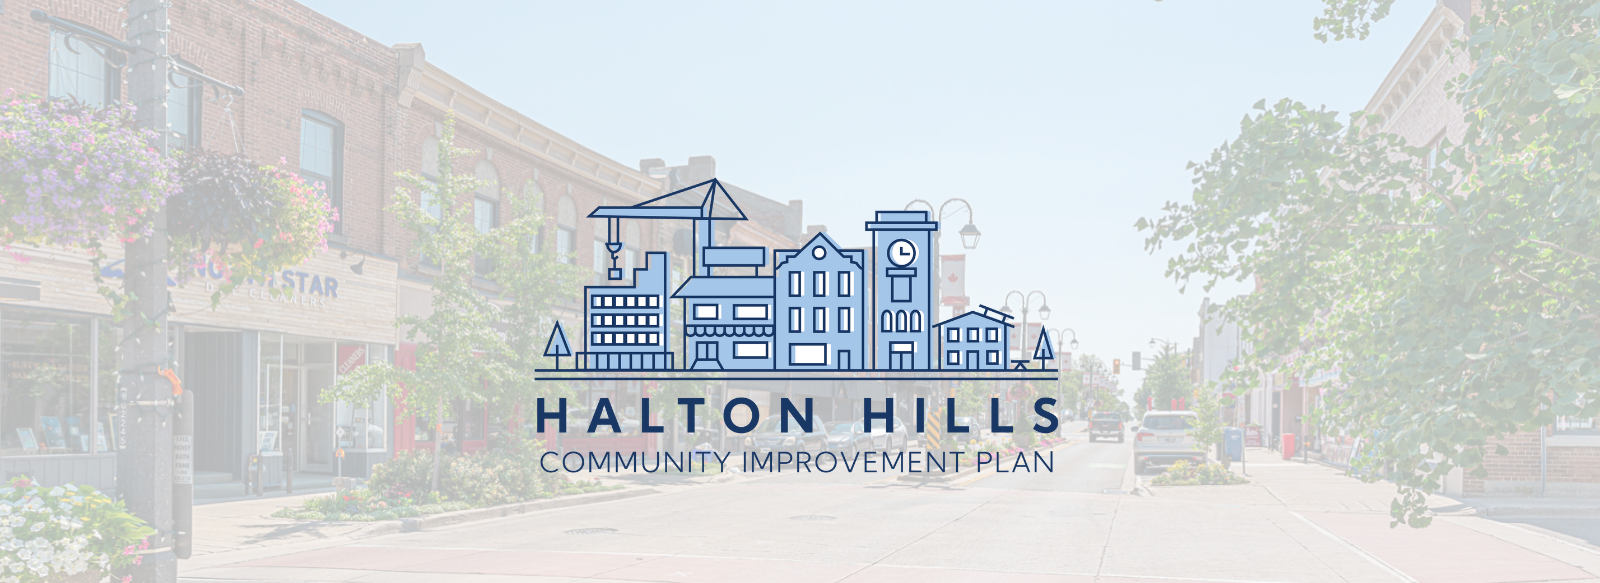 Halton Hills Community Improvement Plan Logo with background image of downtown street